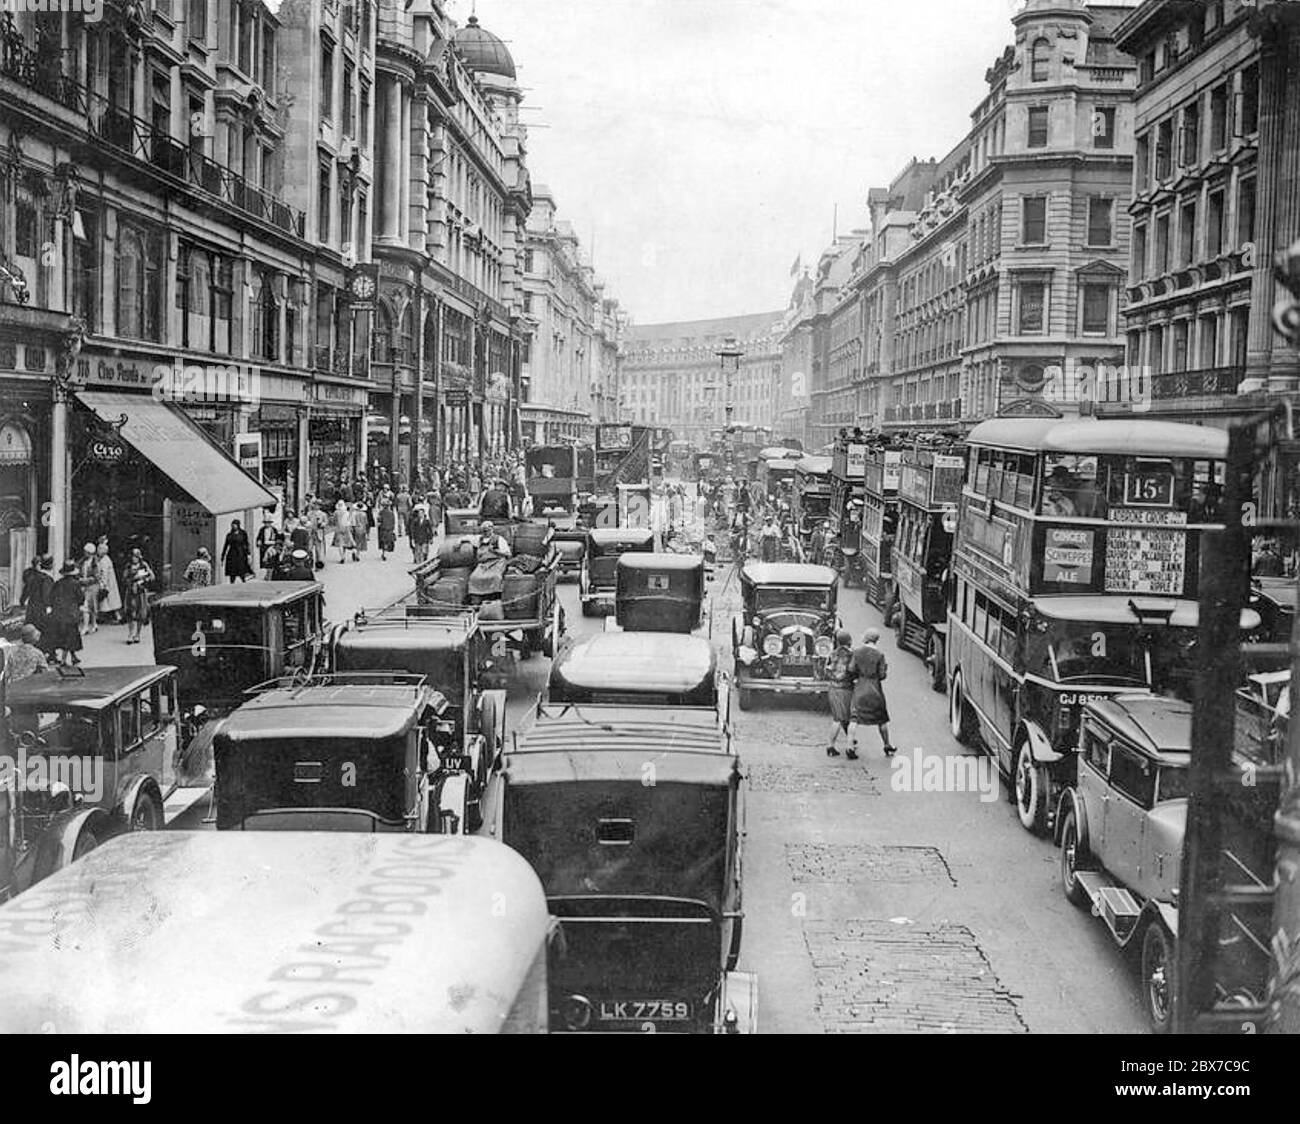 UPPER REGENT STREET, LONDRES, environ 1928 en direction du sud vers Piccadilly Circus Banque D'Images